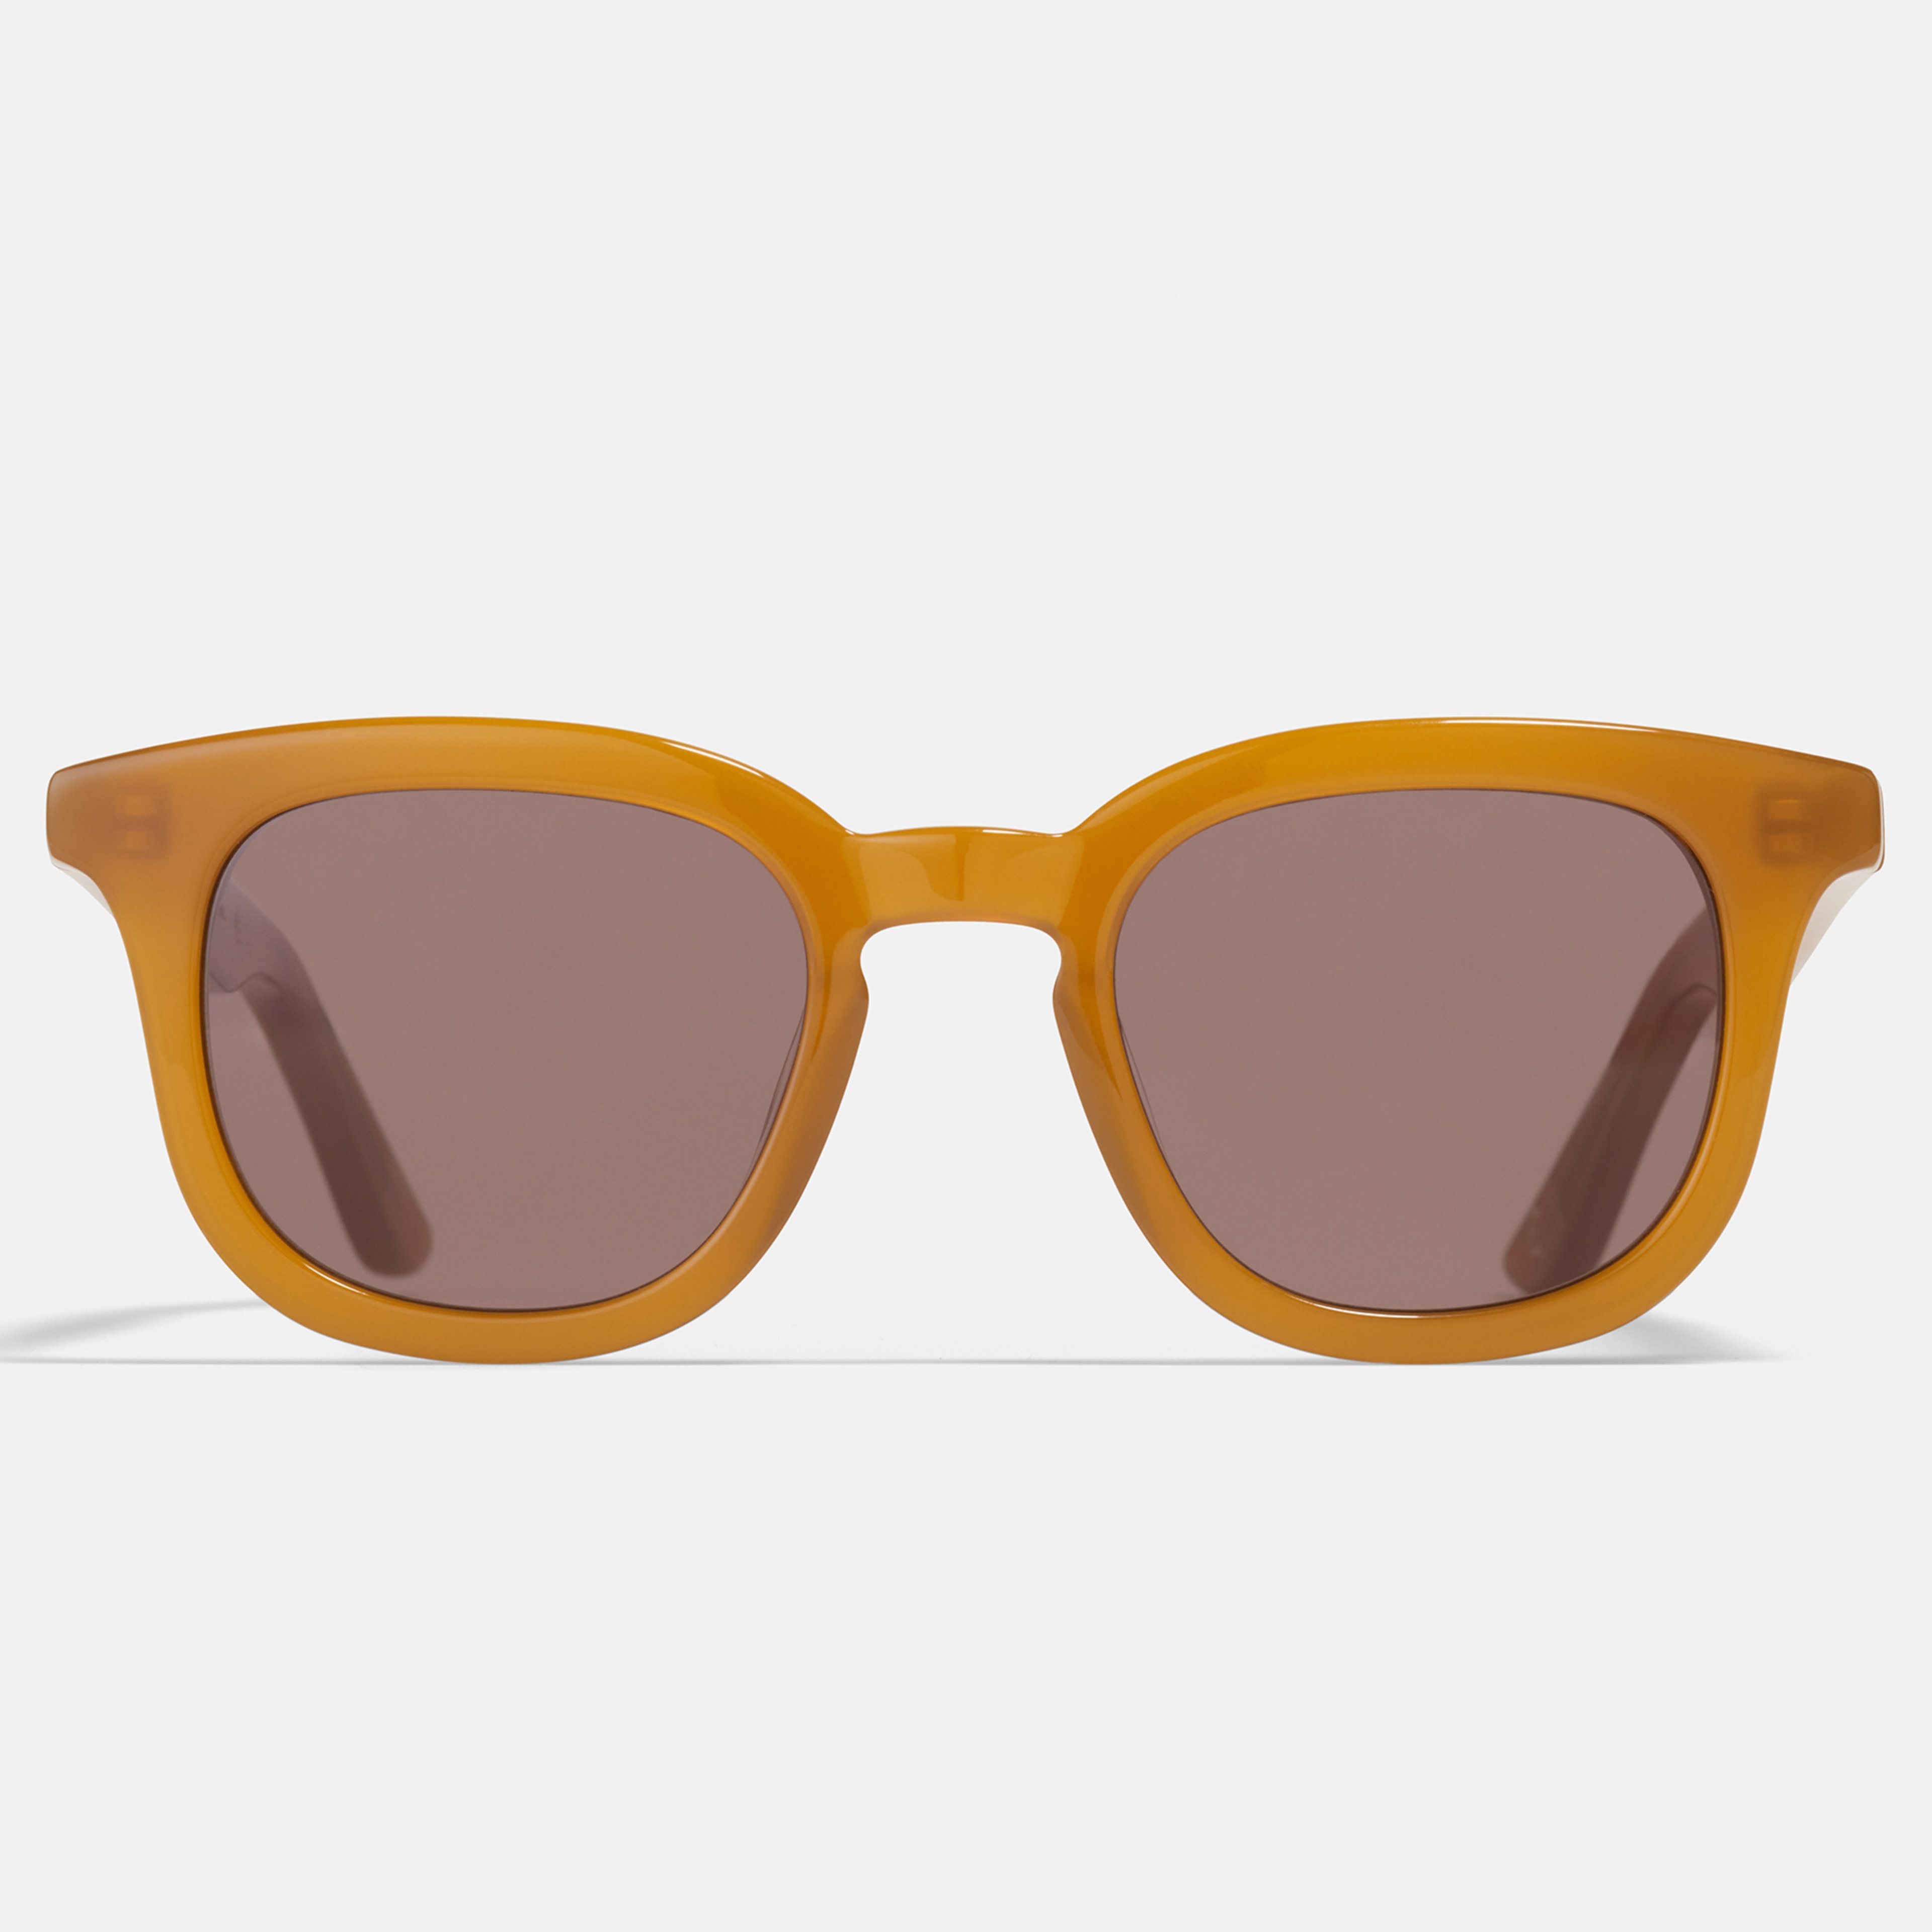 Ace & Tate Sunglasses | Square Renew bio acetate in Brown